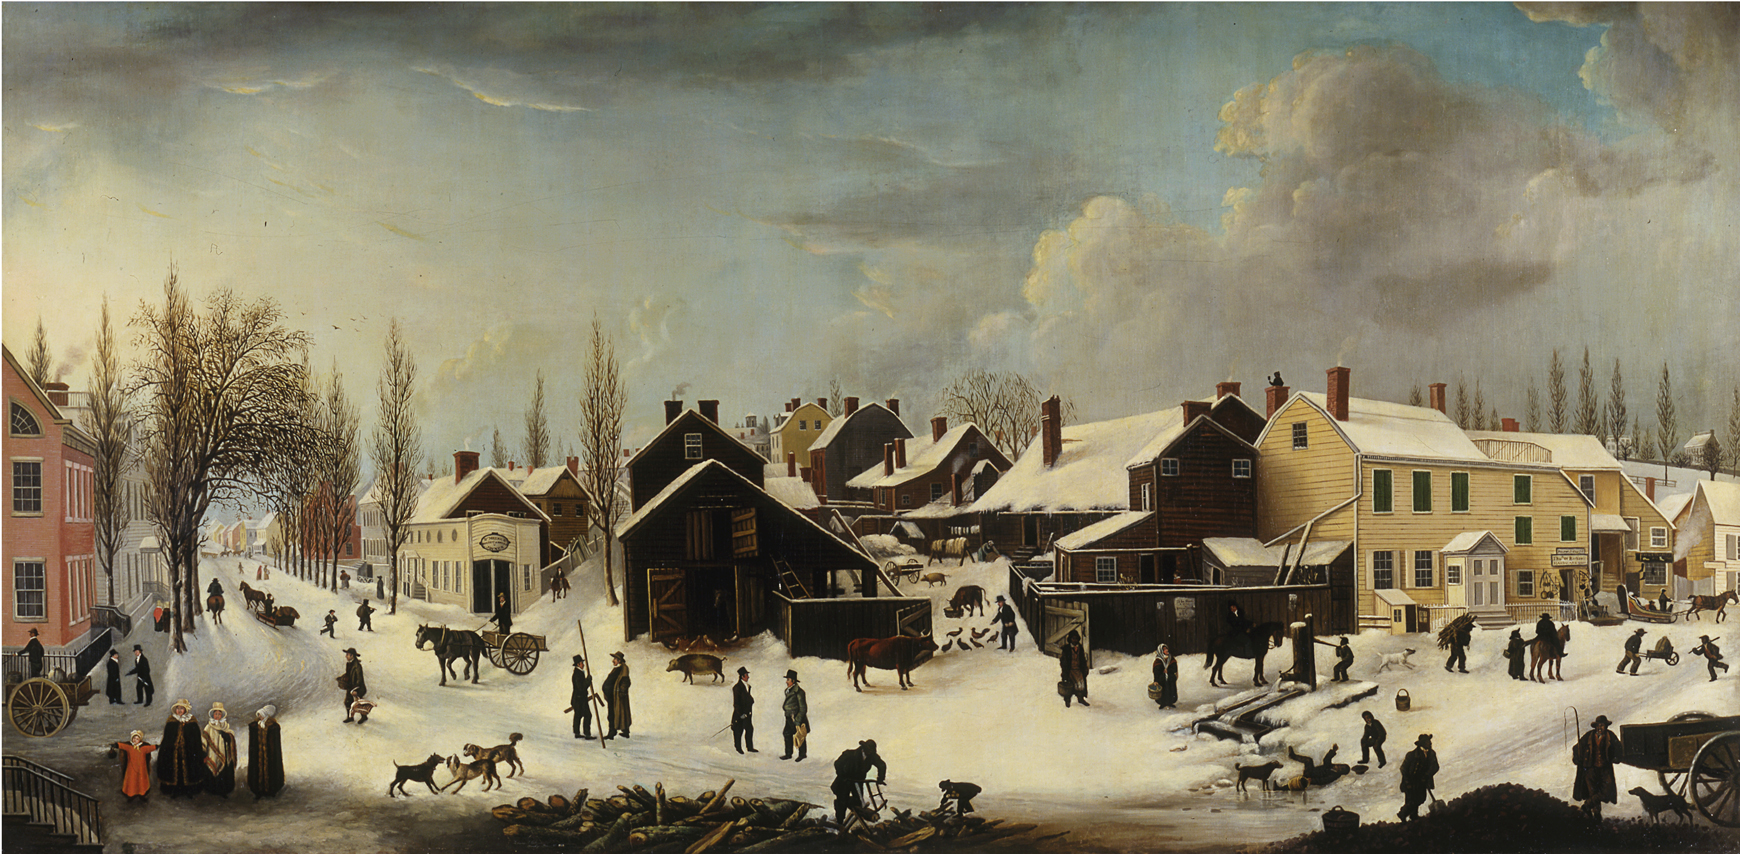 Louisa Ann Coleman, cena de inverno no Brooklyn, Nova York, 1817-1820, 1853. Museu da cidade de Nova York. 53.2